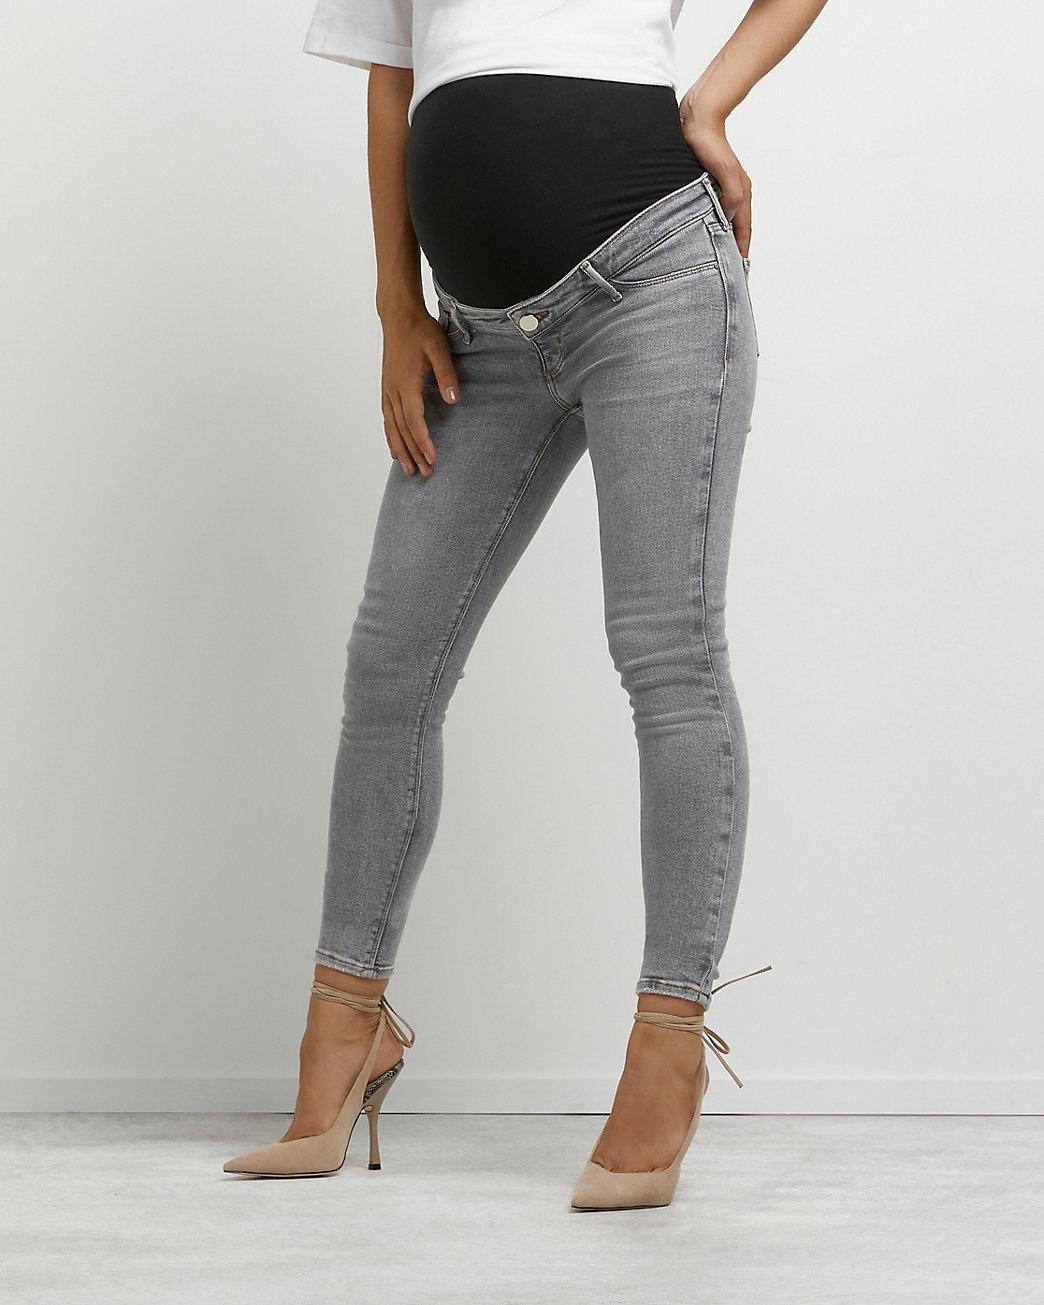 River Island Denim Grey Molly Maternity Skinny Jeans in Gray - Lyst